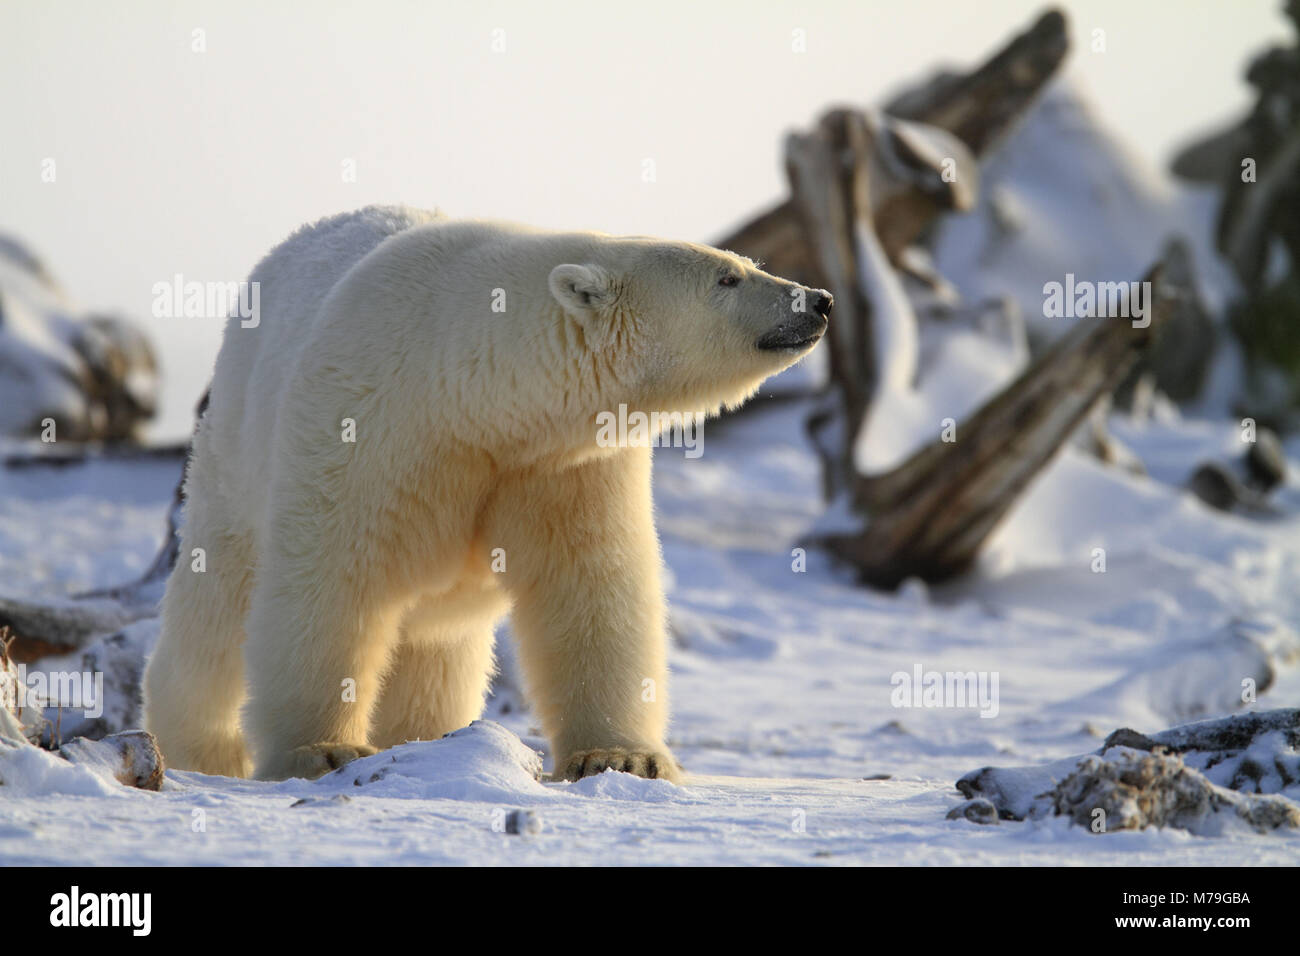 North America, the USA, Alaska, North Alaska, Arctic Nationwide Wildlife Refuge, Kaktovik, polar bear, Ursus maritimus, Stock Photo